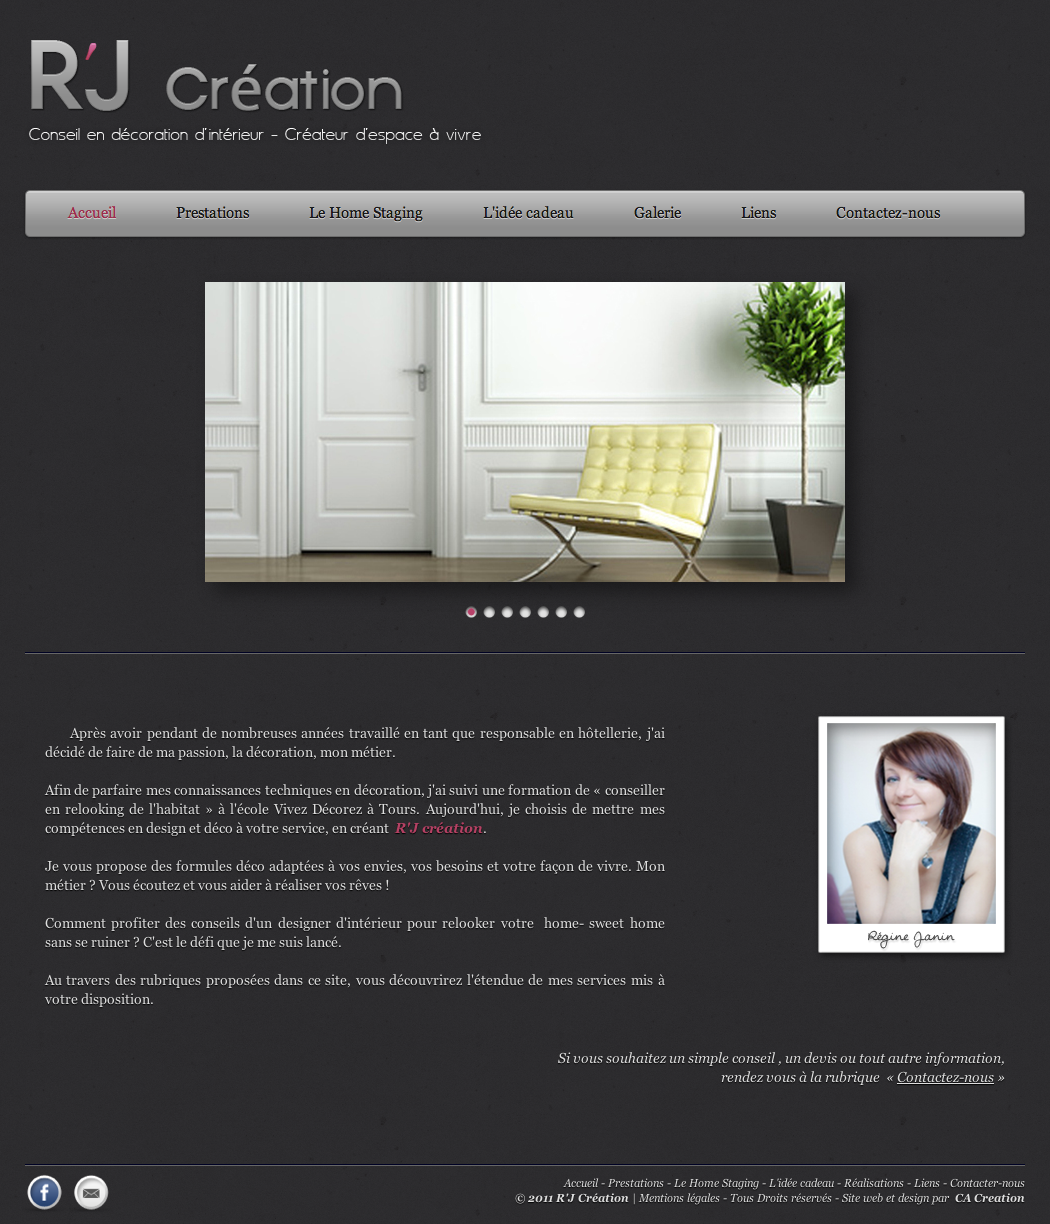 rjcreation home staging business card Website relloking deco coaching déco idee cadeau aménagement interieur